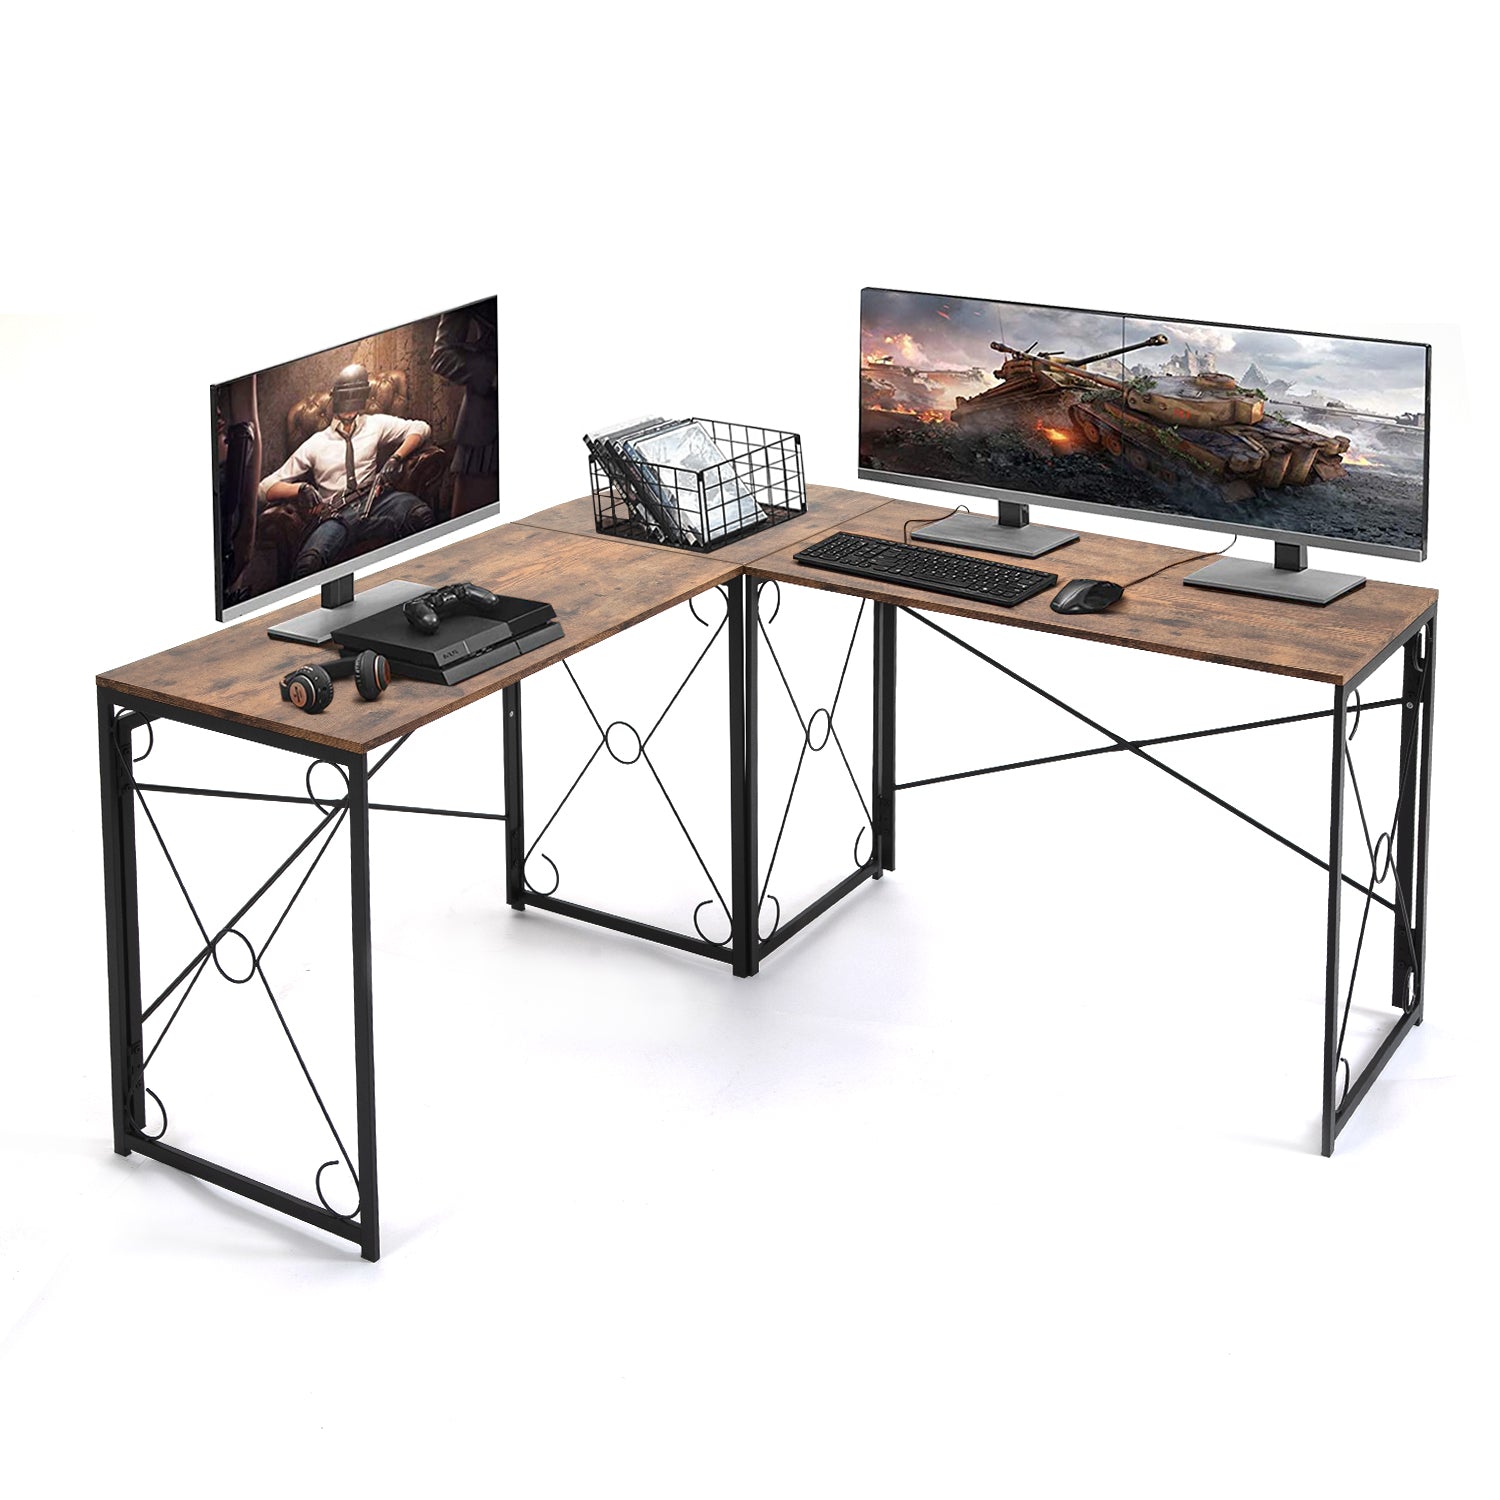 YAMSORO L Shaped Desk 59” Corner Computer Desk, Home Office Desk Writing Study Gaming Table, Large Long Workstation, Brown